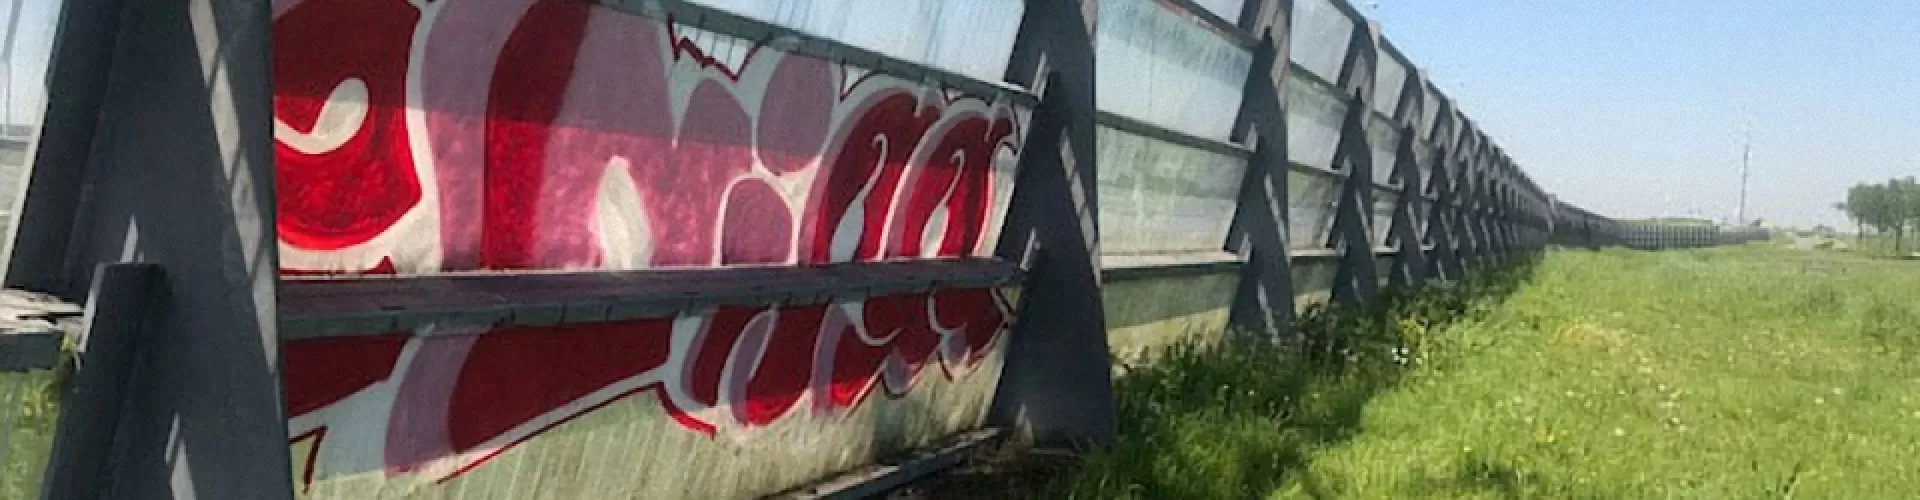 Graffiti onderhoud uitbesteden?